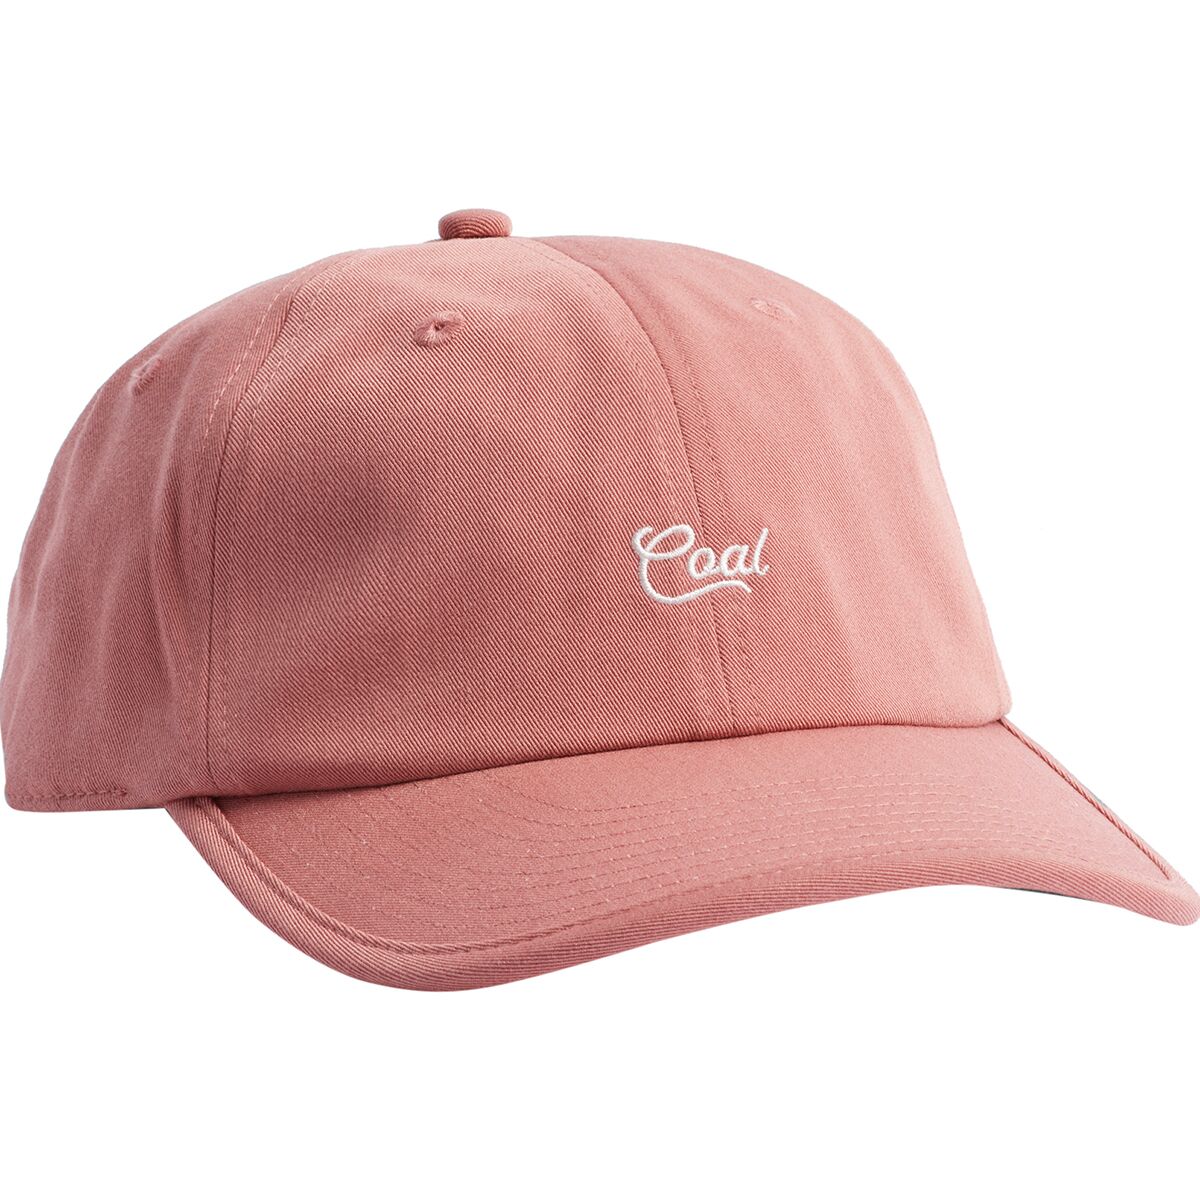 кепка new jack – детская coal headwear цвет 8 bit Сосна шляпа Coal Headwear, цвет dusty rose